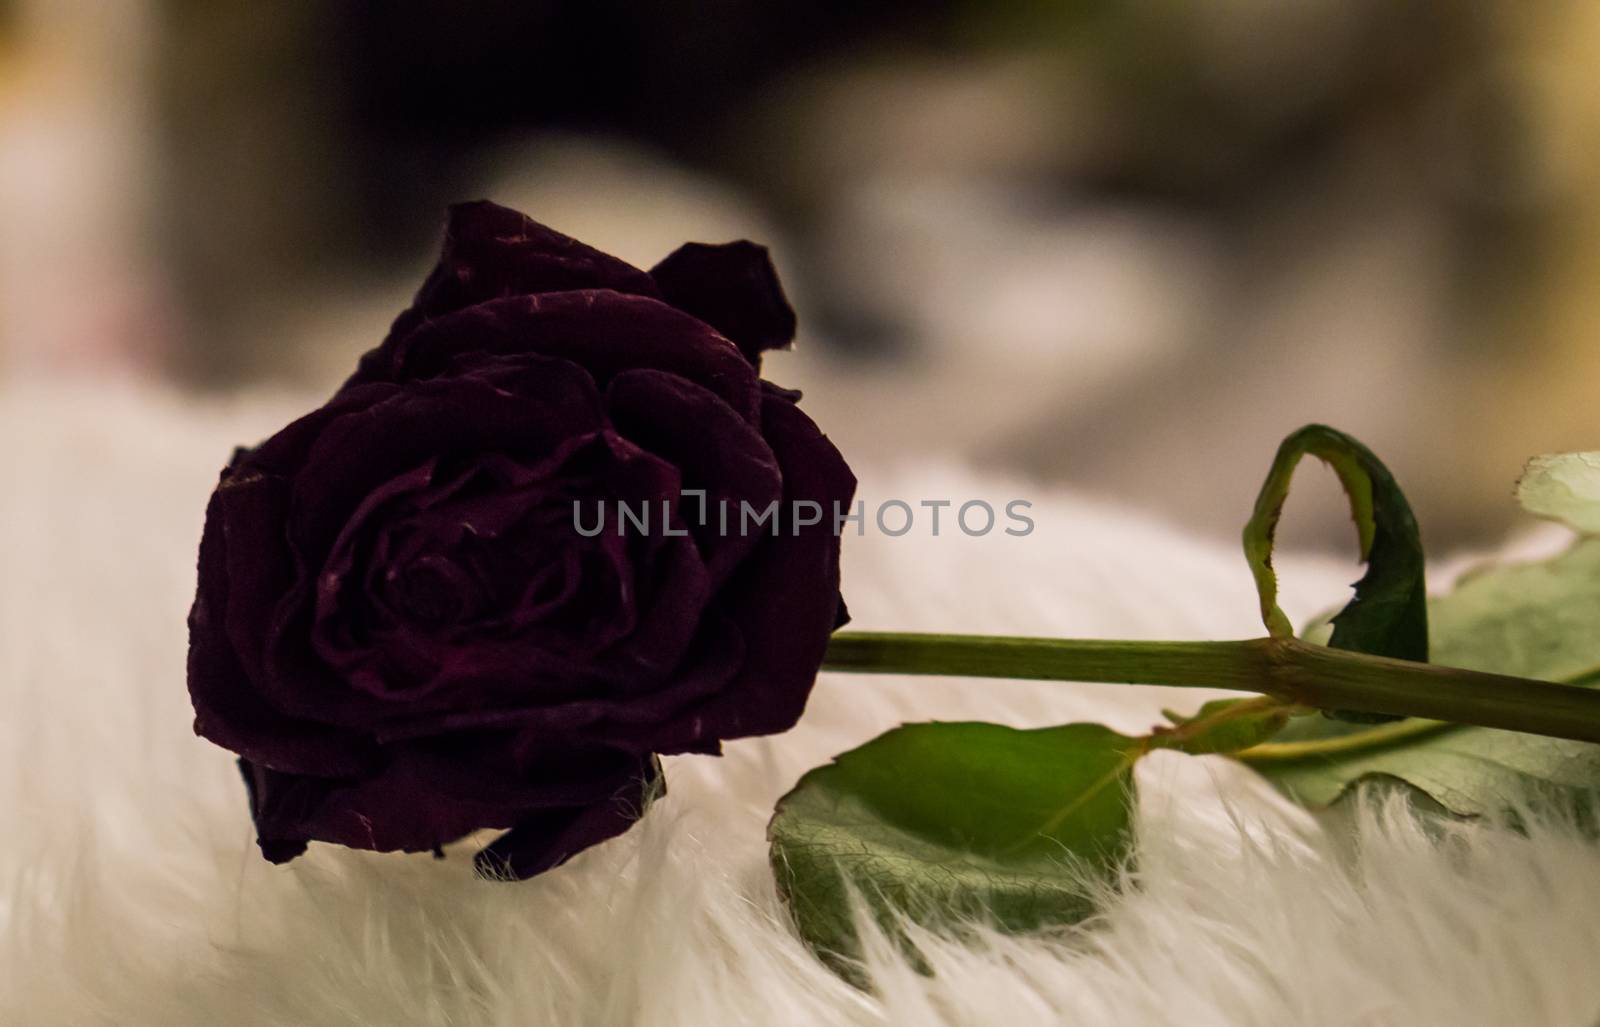 Gothic valentine black rose in macro close up alternative way of celebrating valentines day by charlottebleijenberg